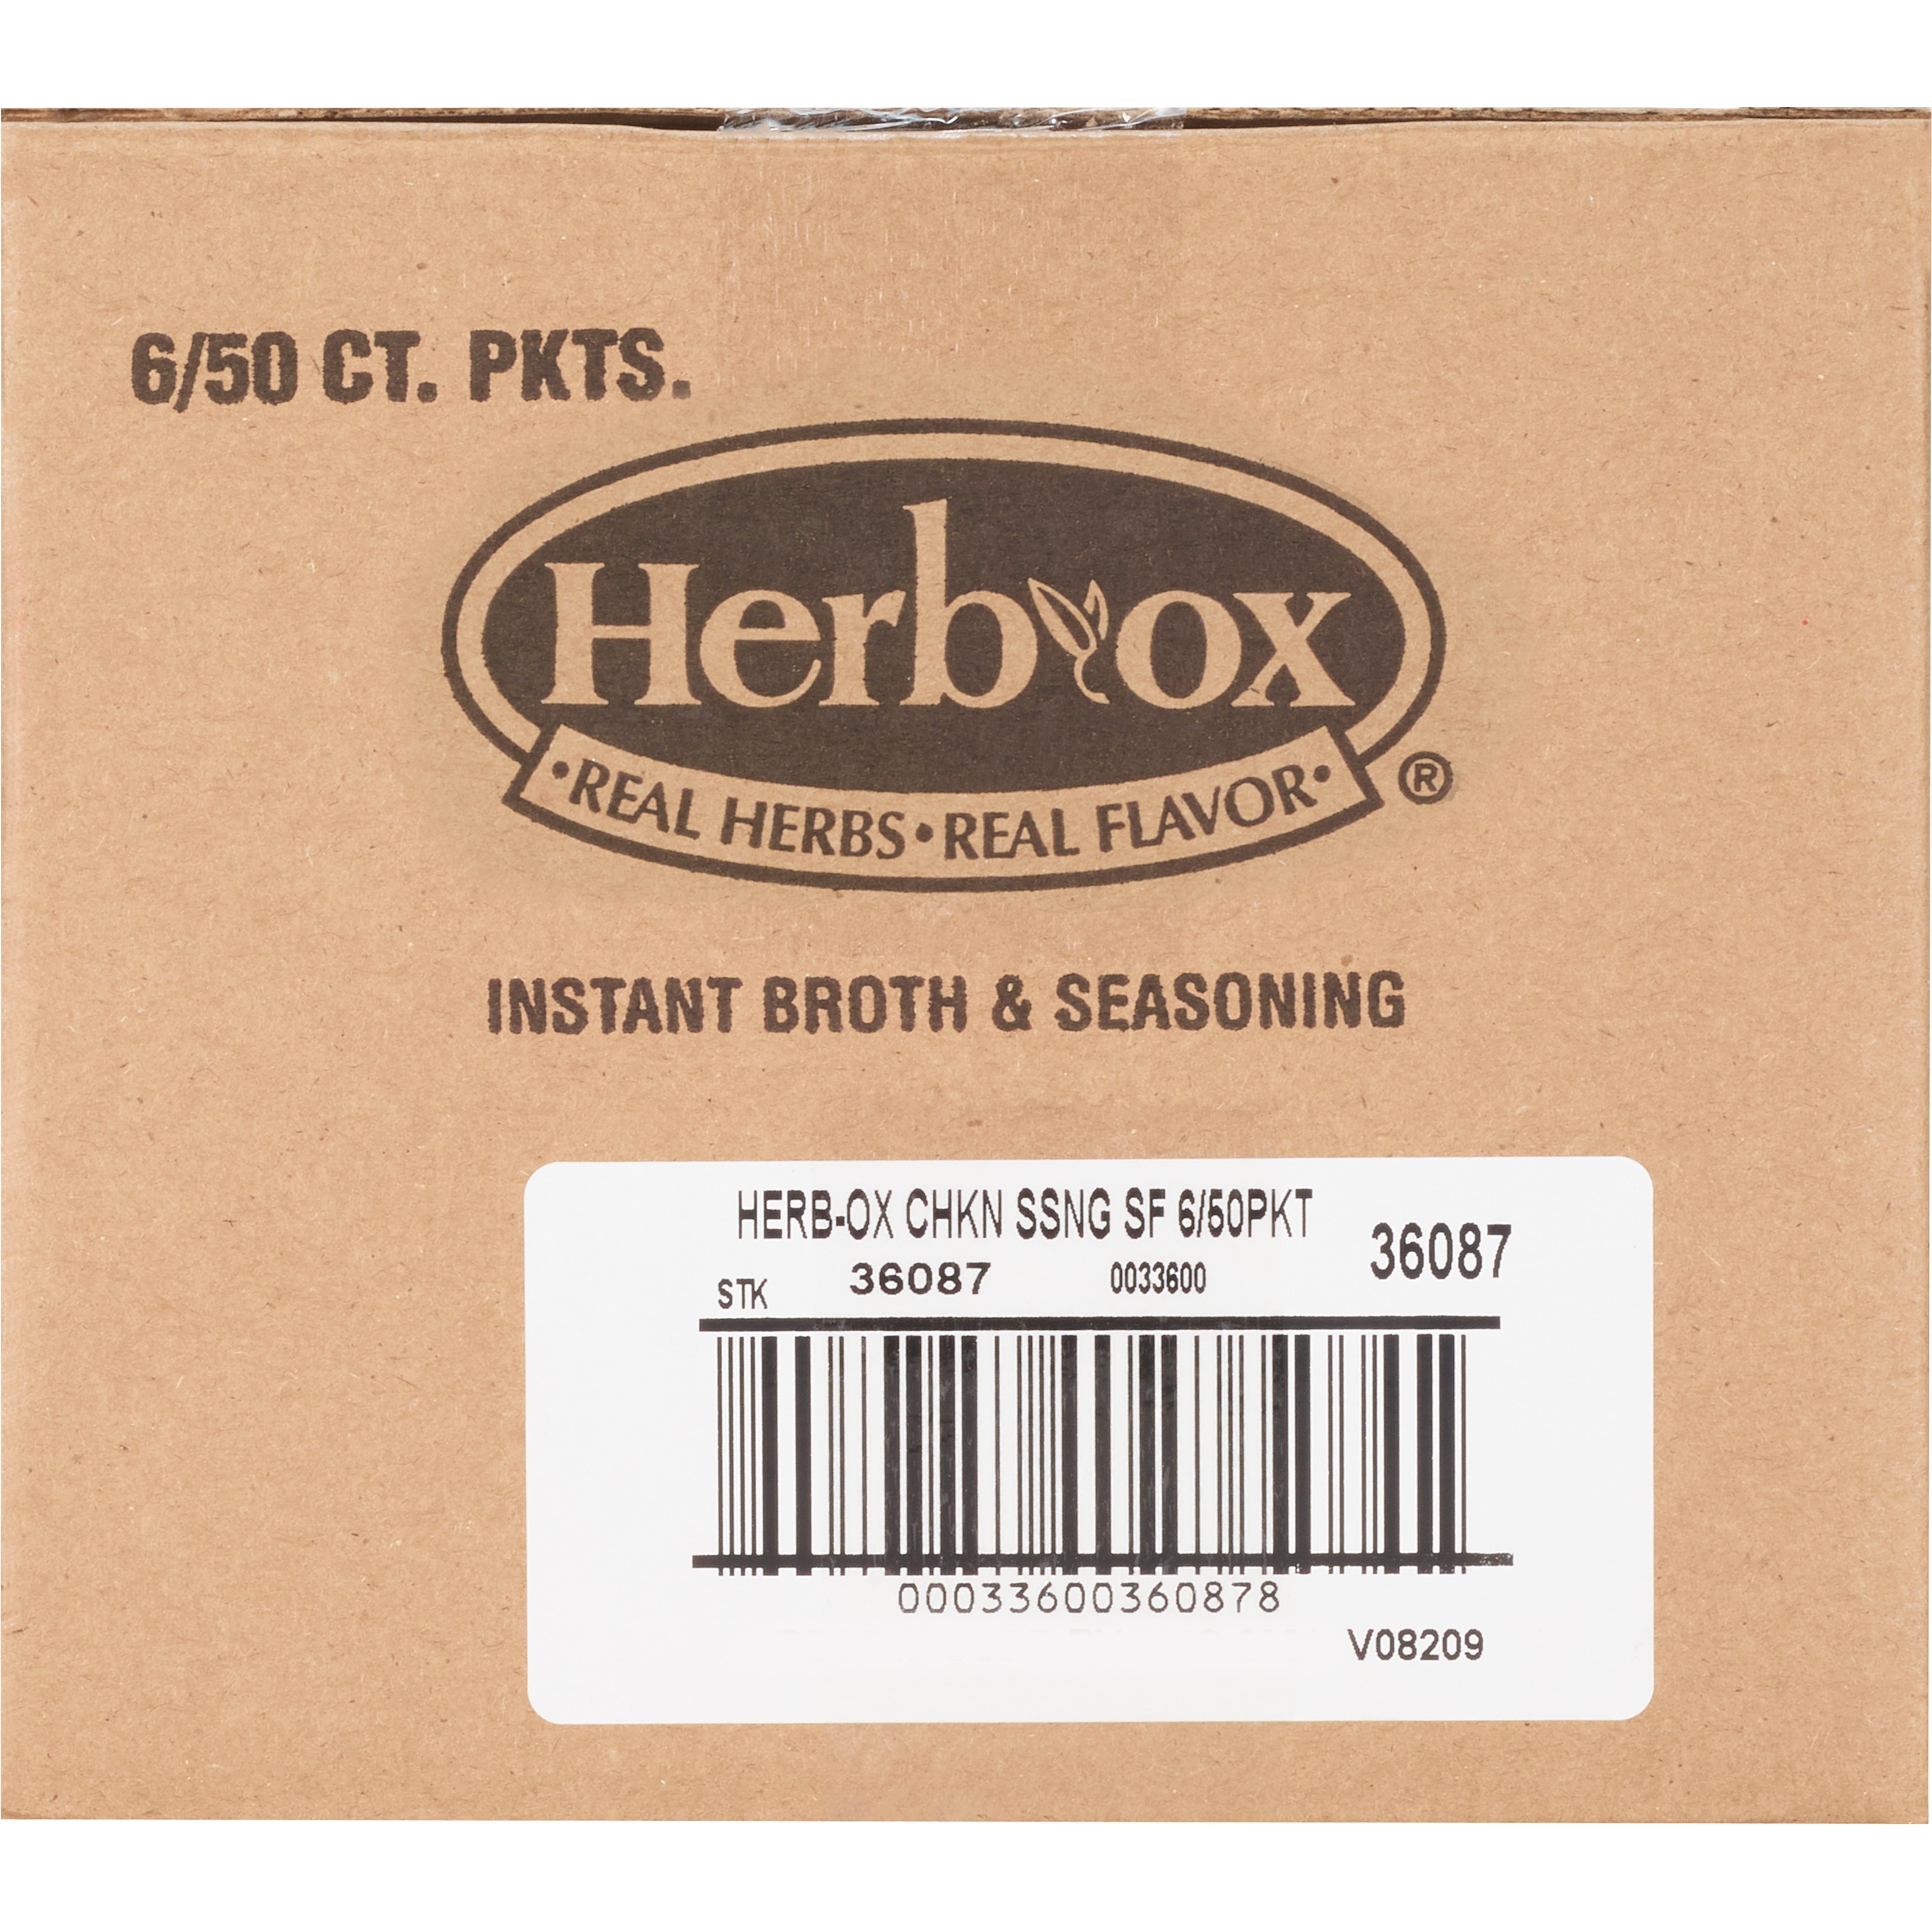 Instant Broth Herb-Ox Sodium Free Chicken Flavor Liquid 8 oz. Individual Packet